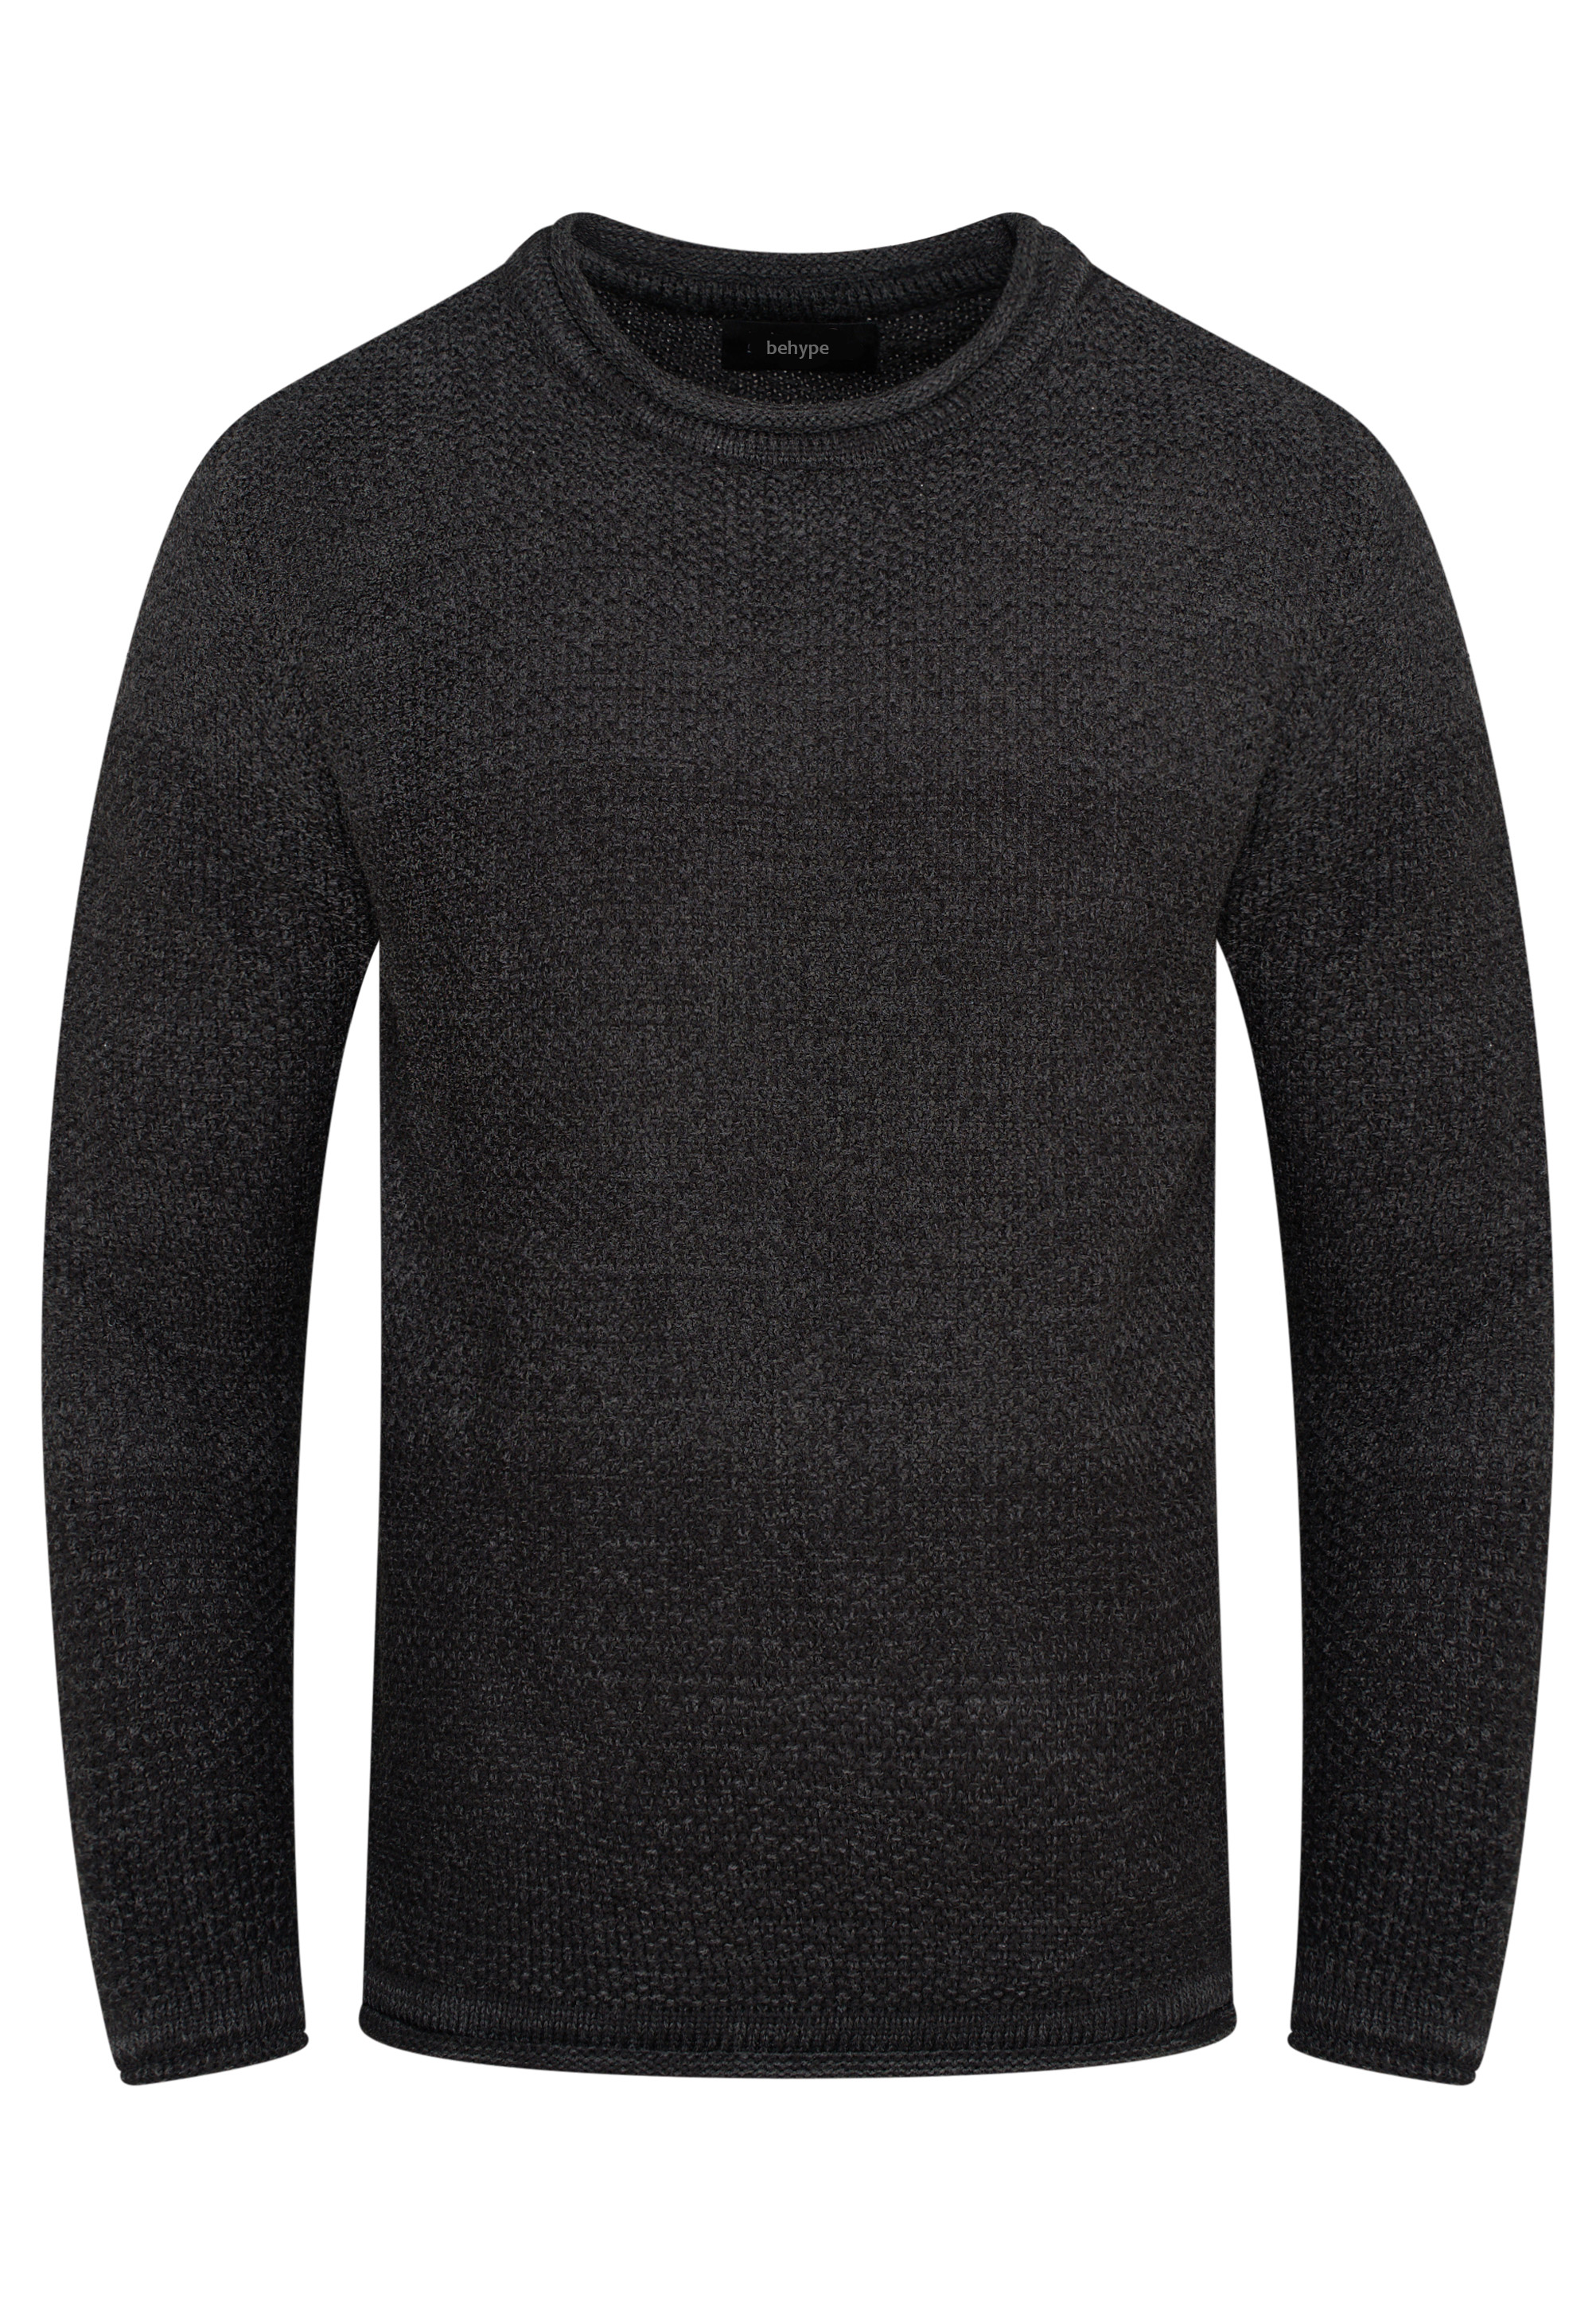 Пуловер behype MKBlone, темно серый пуловер behype mkboni серый